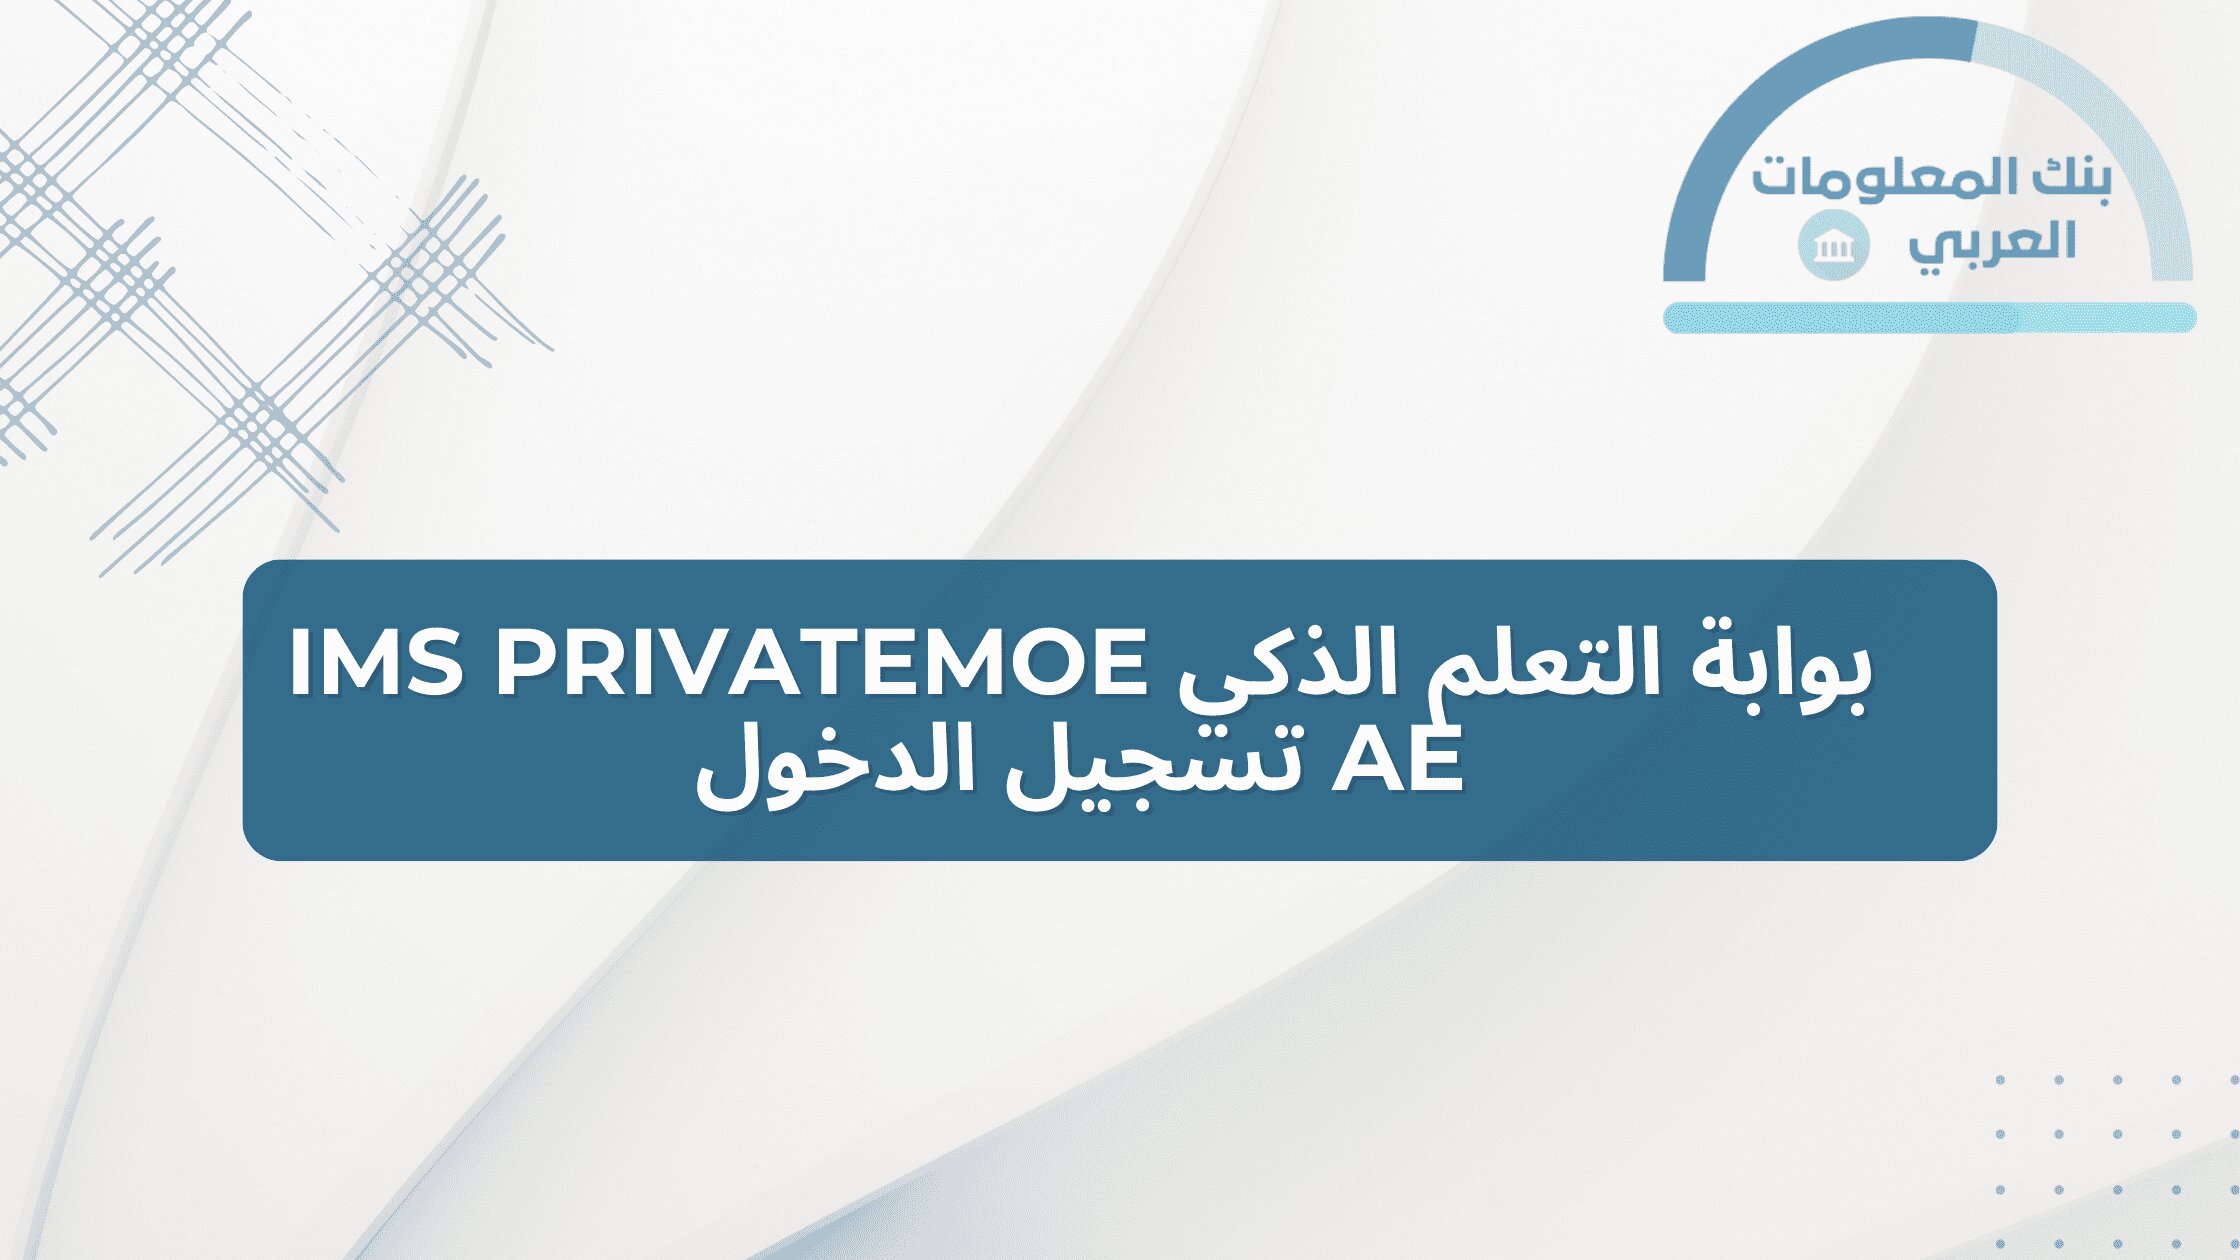 You are currently viewing بوابة التعلم الذكي Ims privatemoe ae تسجيل الدخول